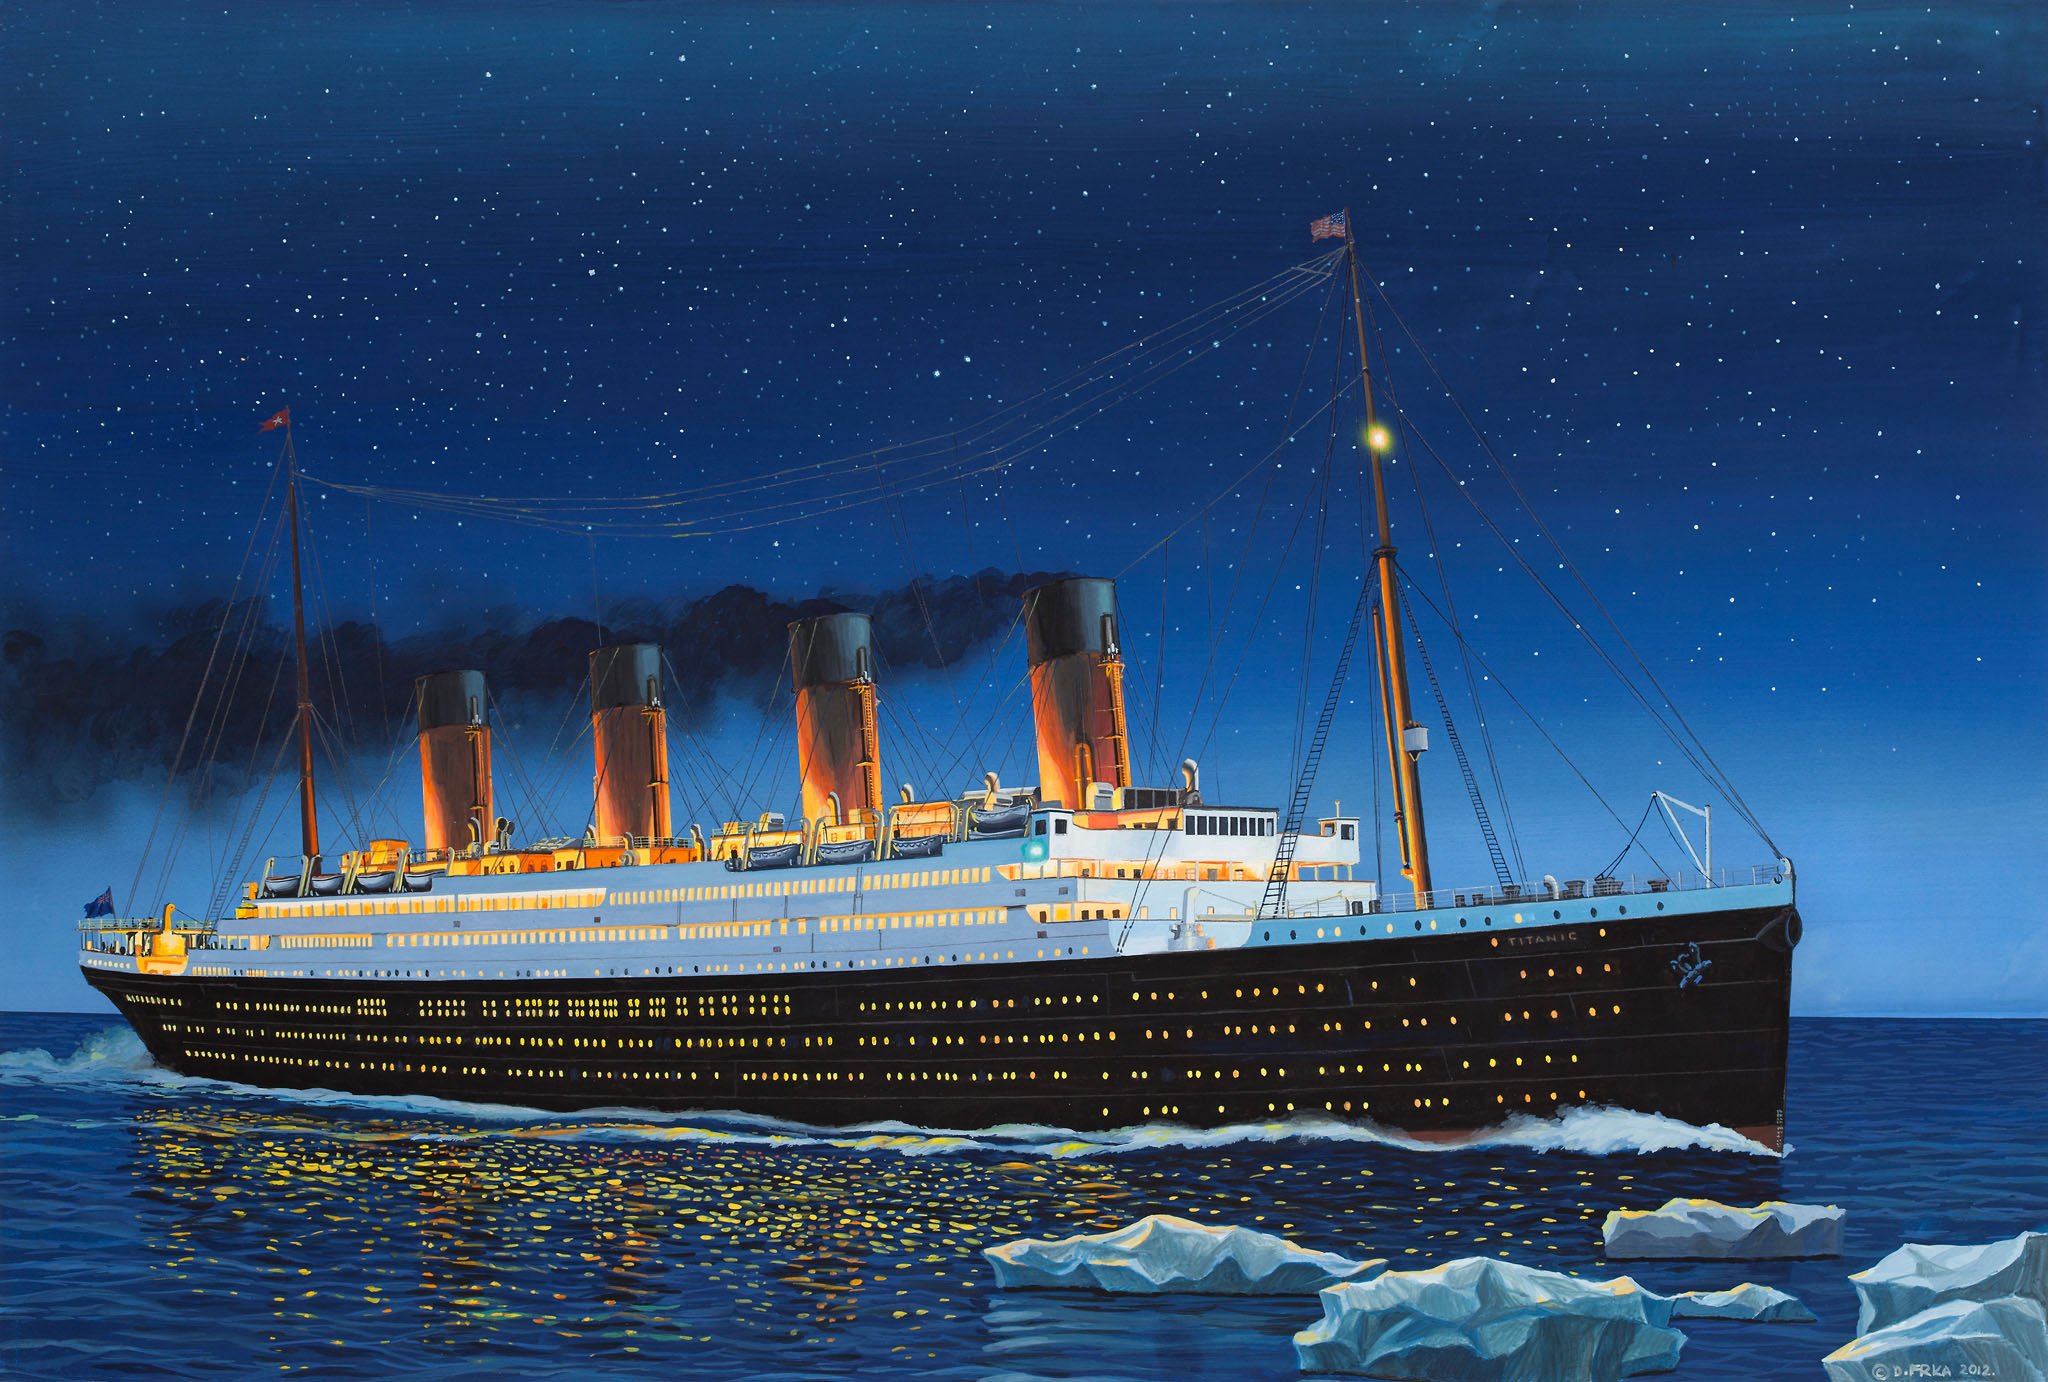 General 2048x1382 ship boat Titanic water ice night stars artwork digital art watermarked